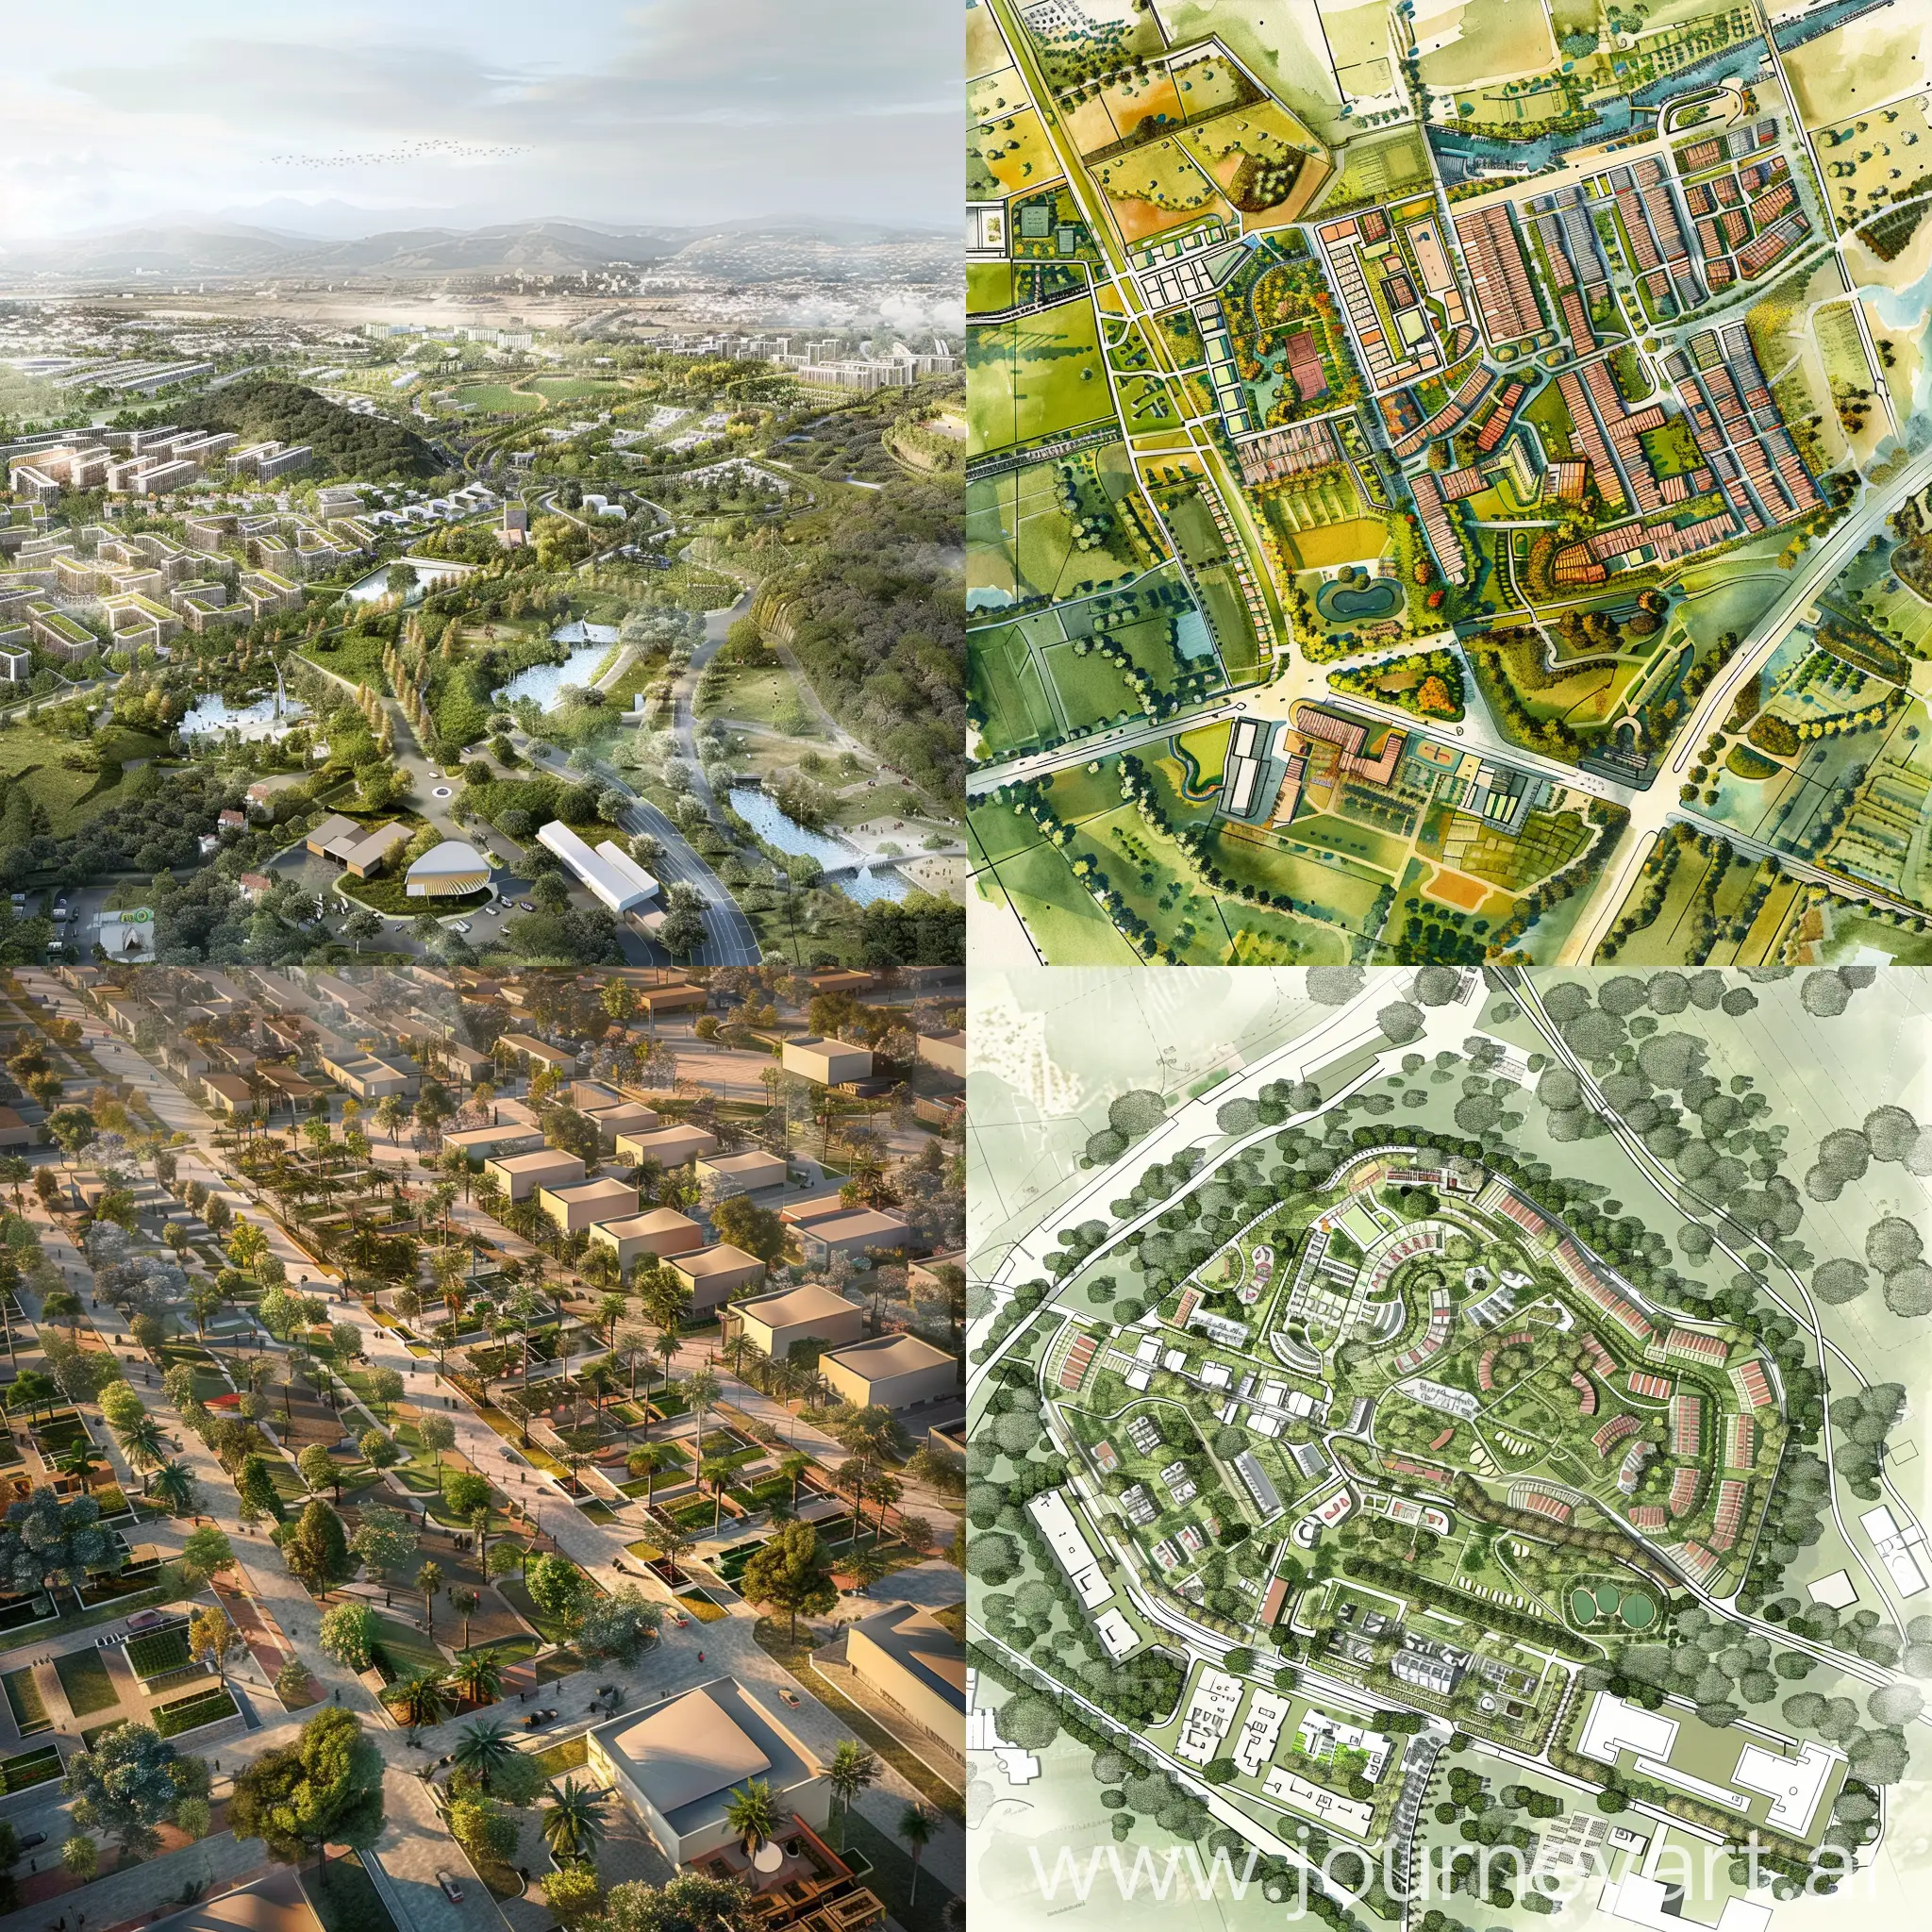 Strategic-Urban-Development-Planning-for-Sustainable-Growth